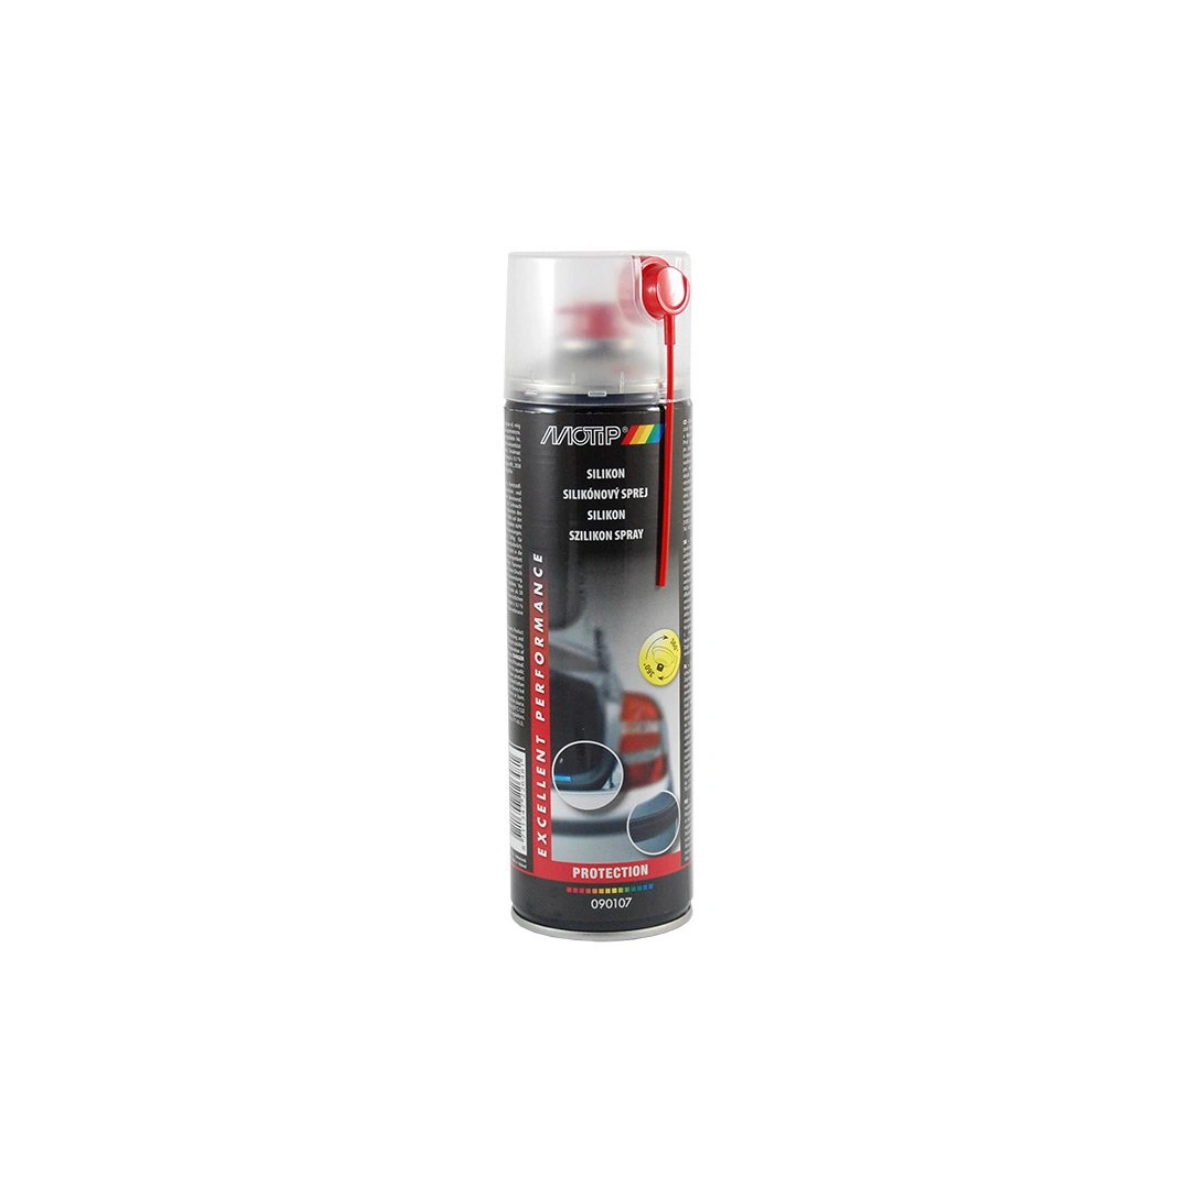  Silikon spray 400 ml, MOTIP - 090107